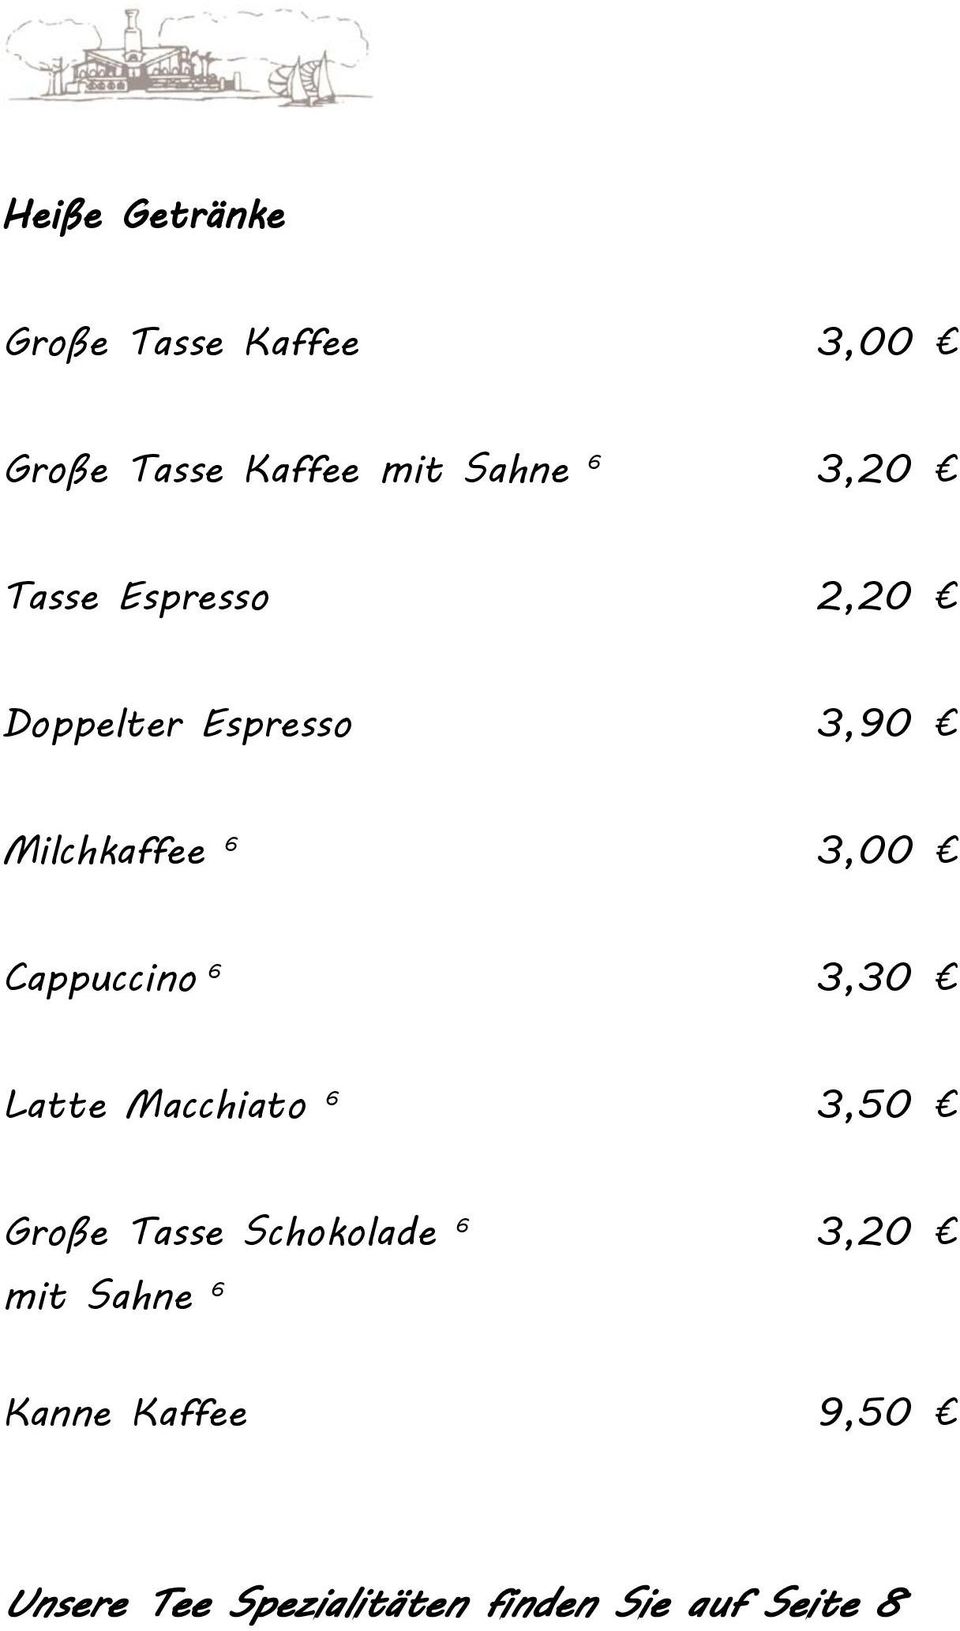 Cappuccino 6 3,30 Latte Macchiato 6 3,50 Große Tasse Schokolade 6 3,20